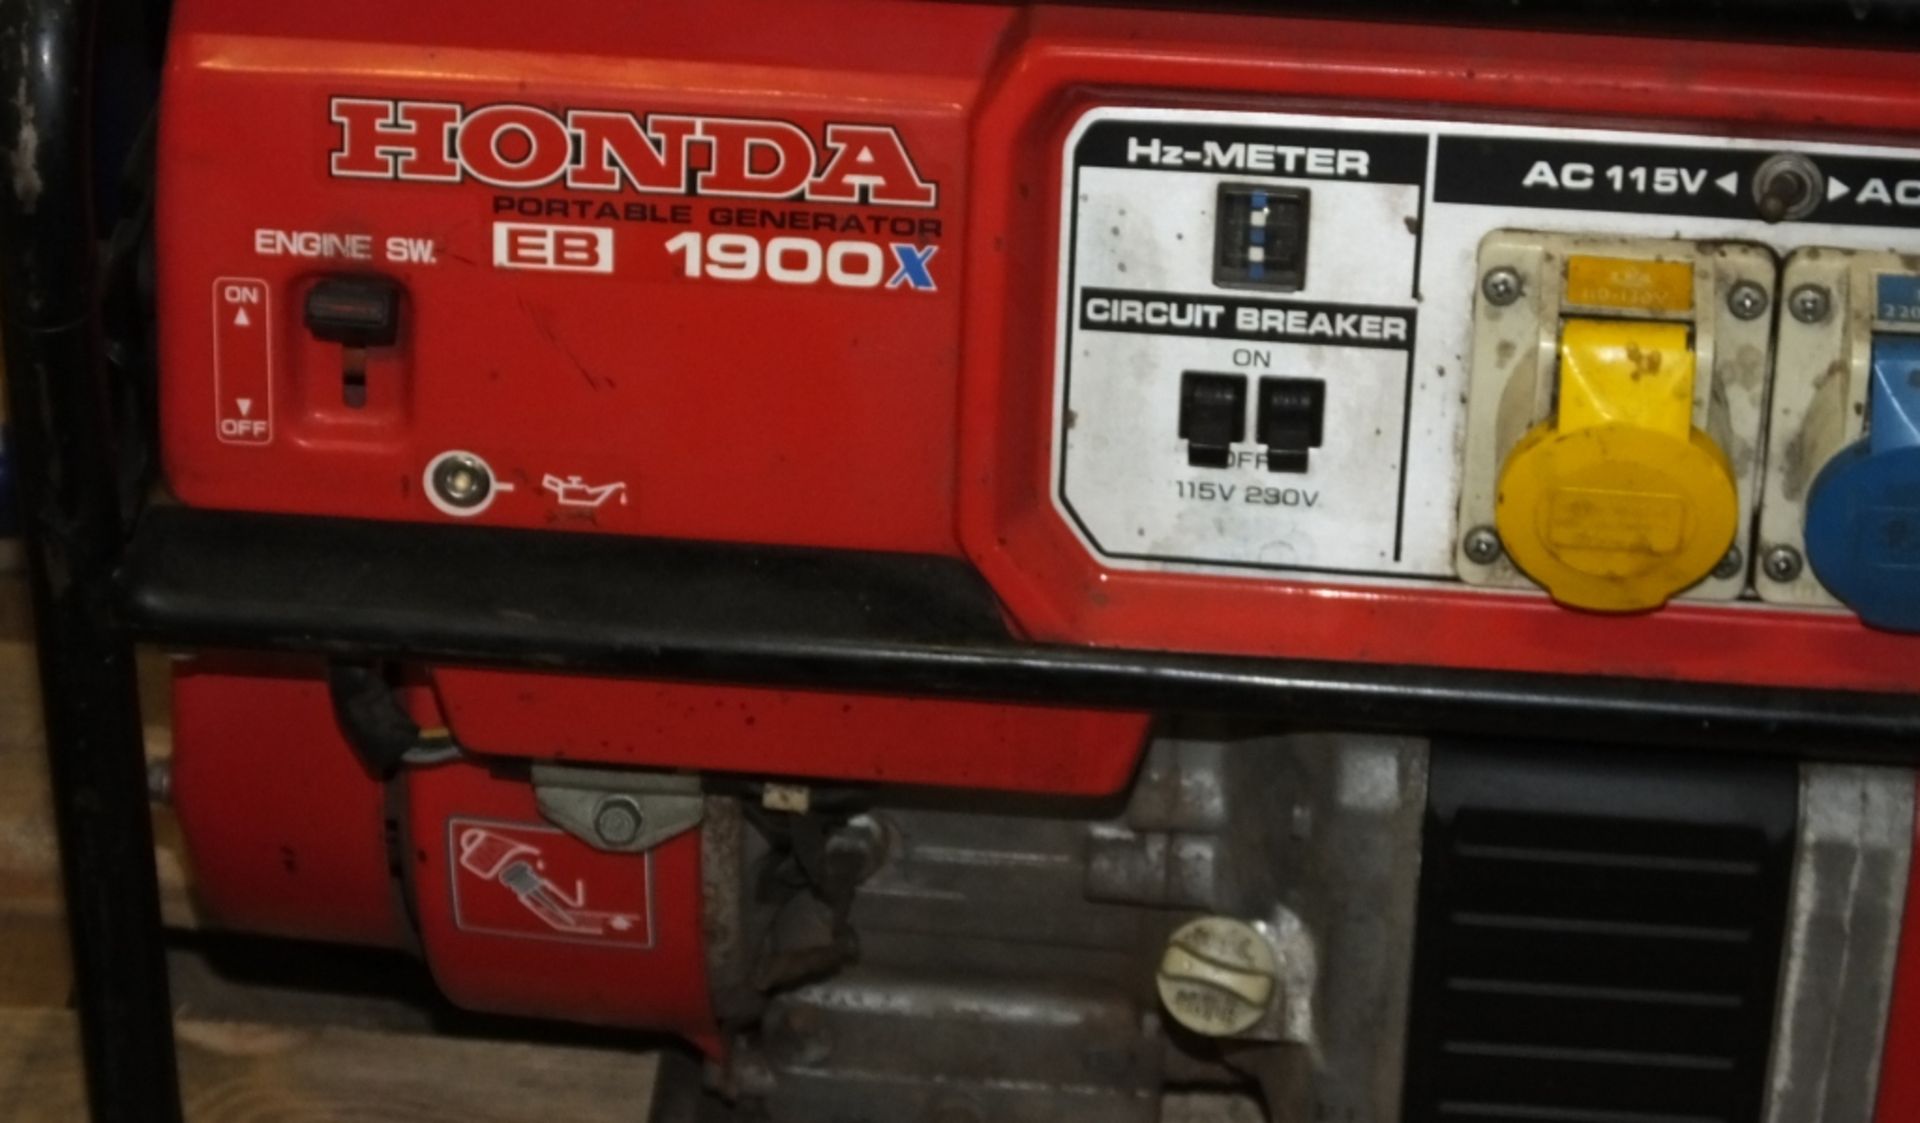 Honda EB 1900X 1.9 KVA Portable generator - Image 2 of 5